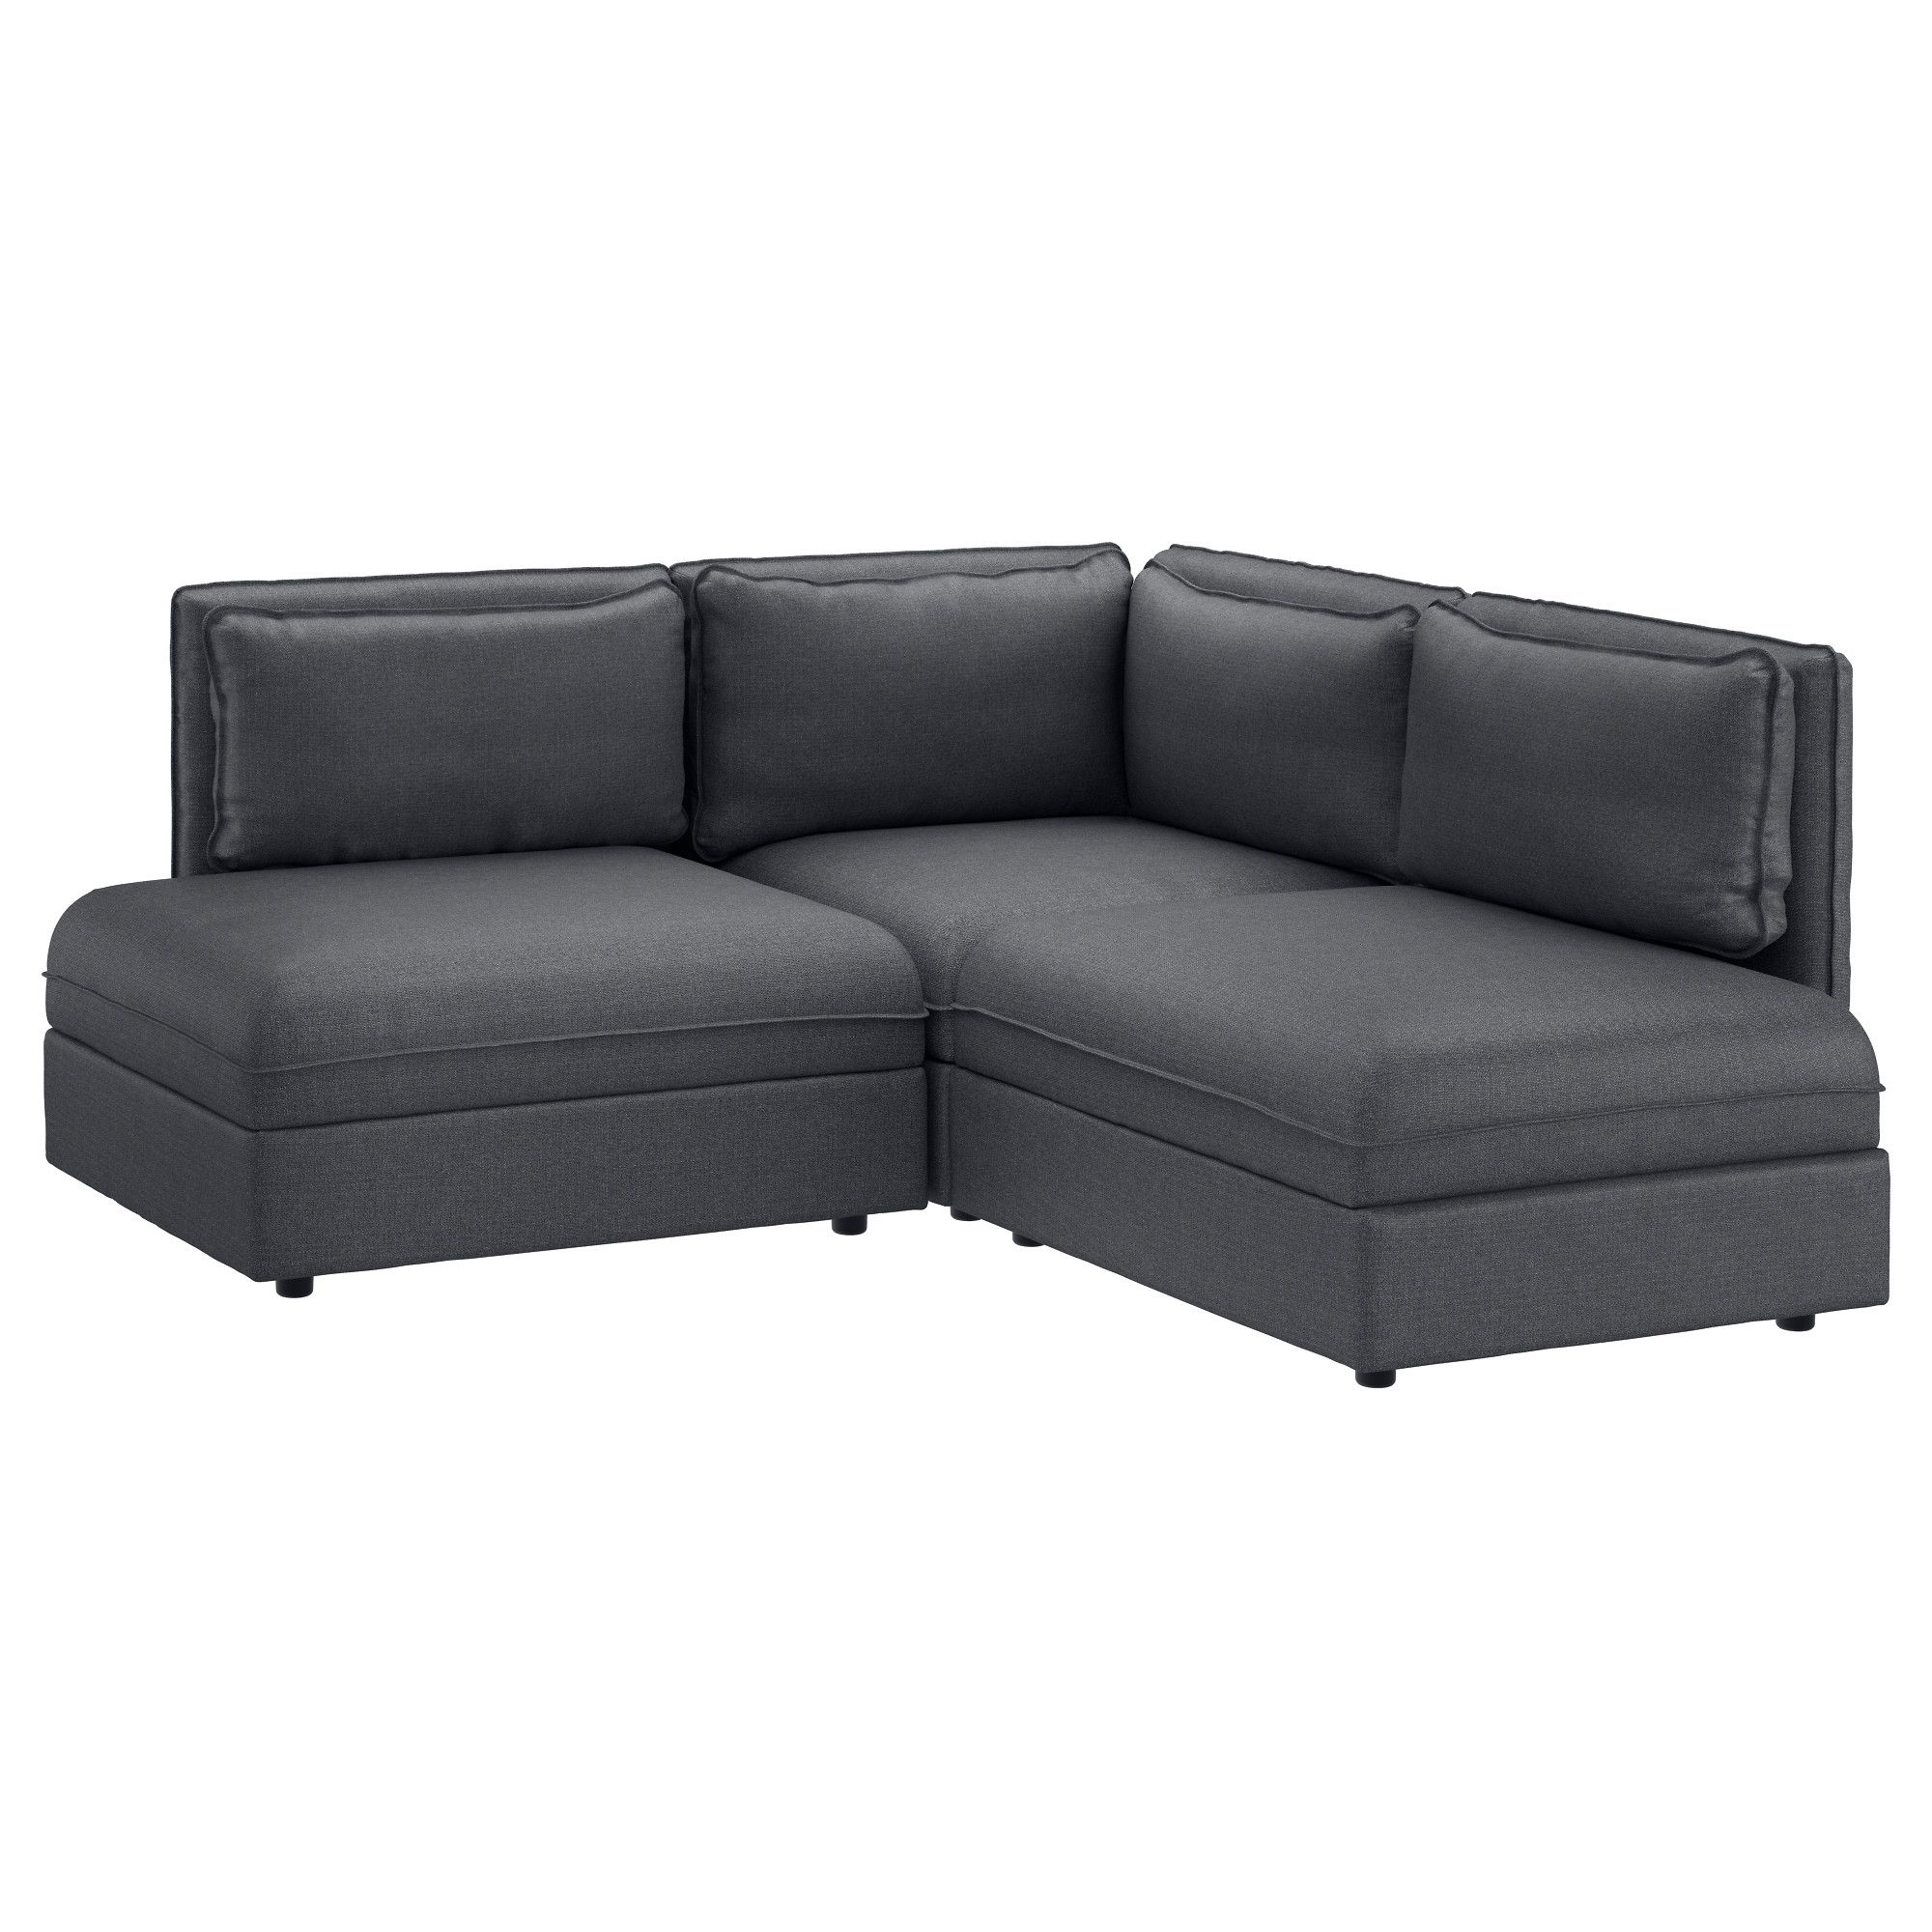 Corner Sofa Chairs Inside Widely Used Vallentuna 3 Seat Corner Sofa Hillared Dark Grey – Ikea (View 1 of 15)